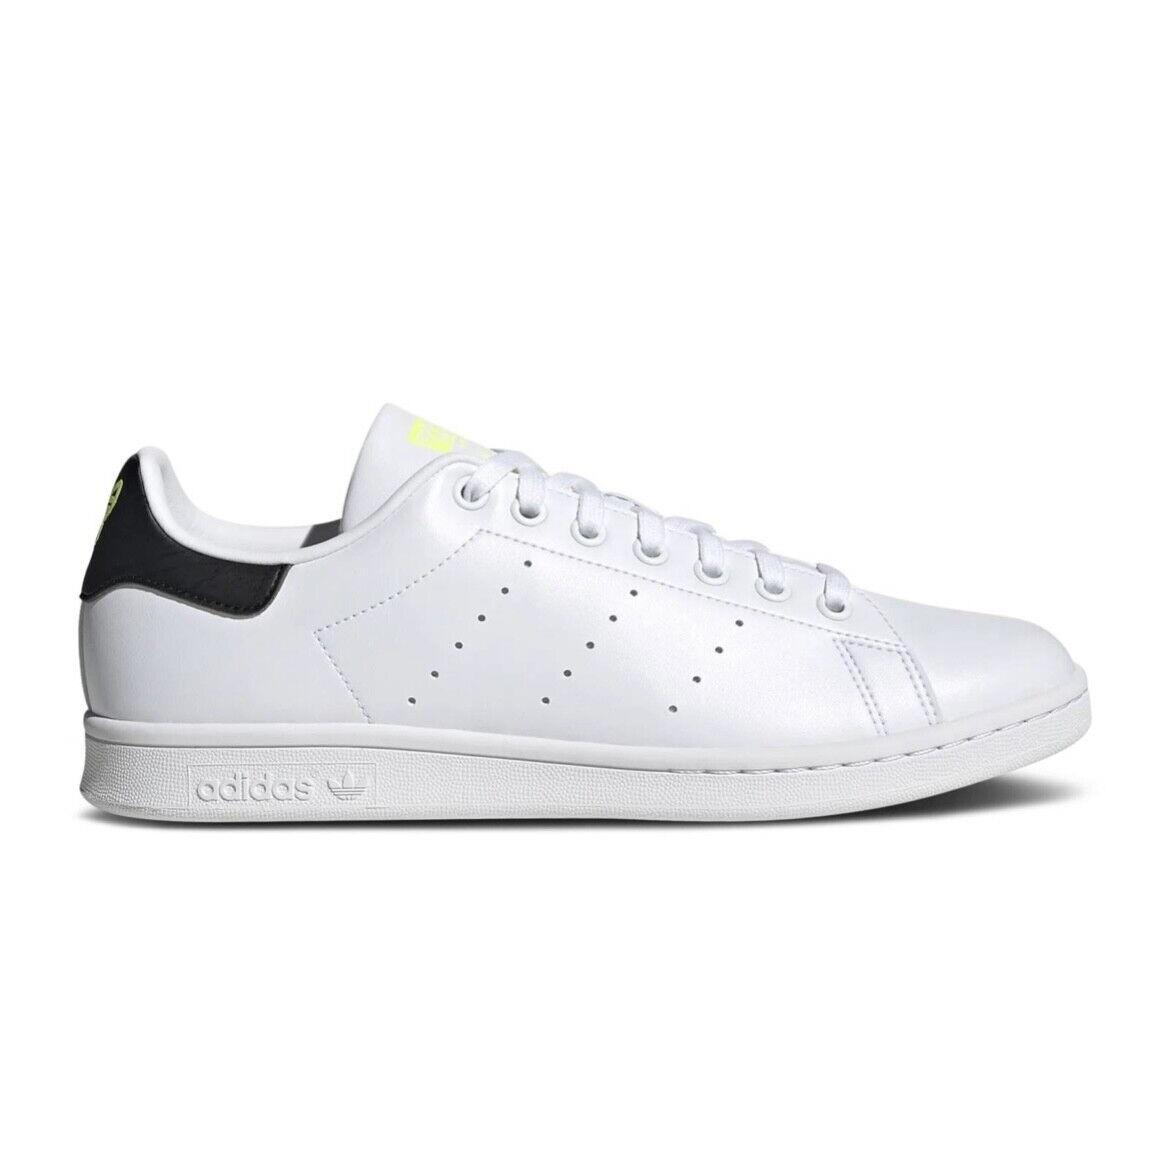 Adidas Stan Smith Mens Casual Retro Tennis Shoe White Black Trainer Sneaker